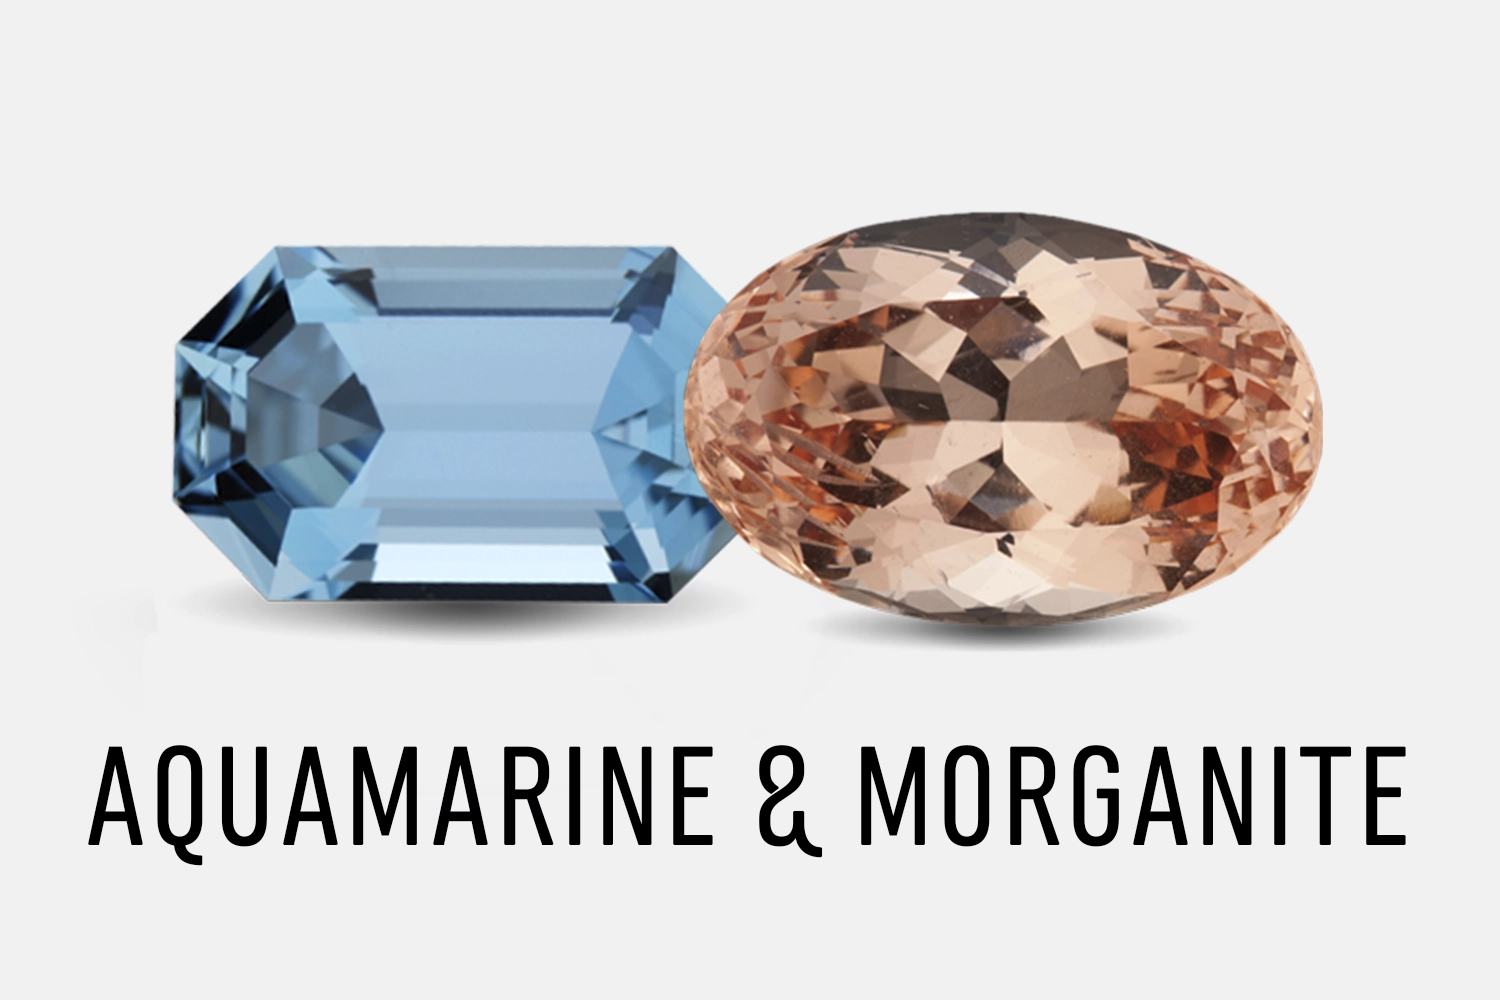 Aquamarine and Morganite